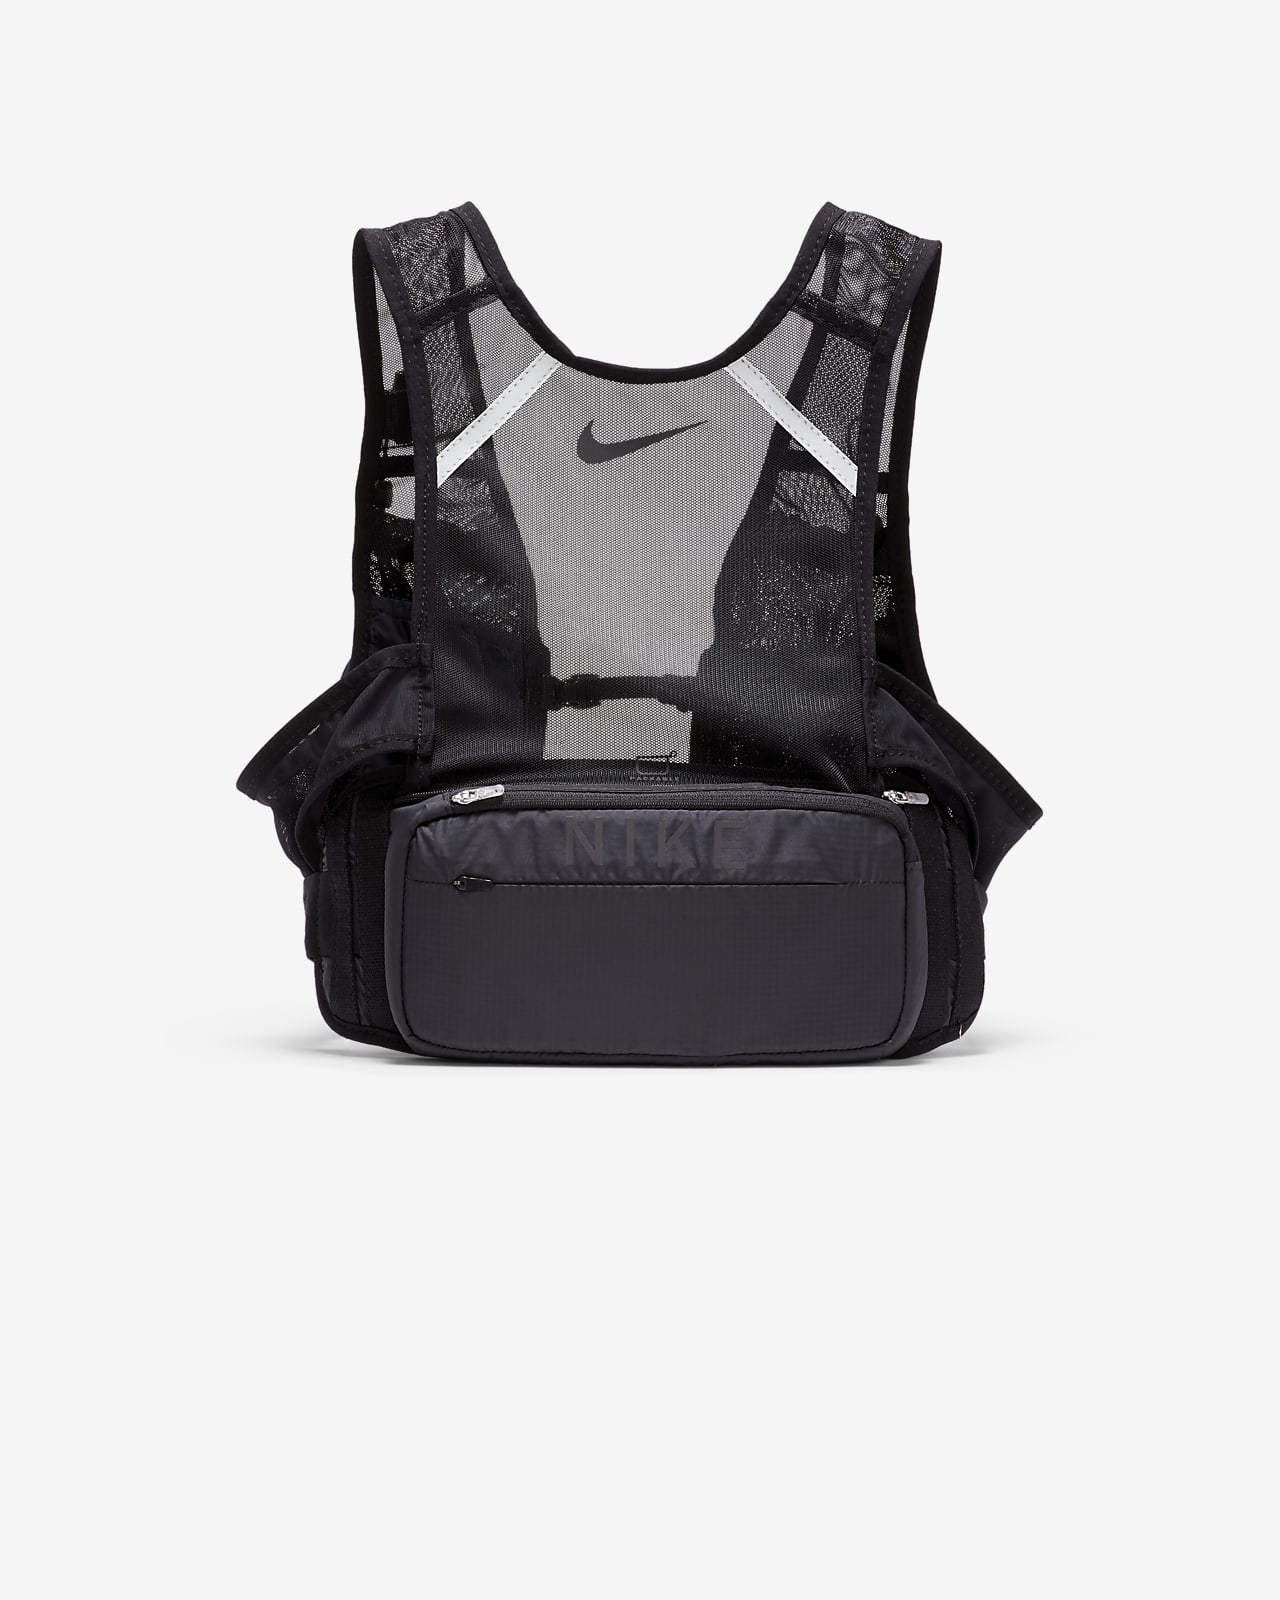 Nike Transform Packable Running Vest